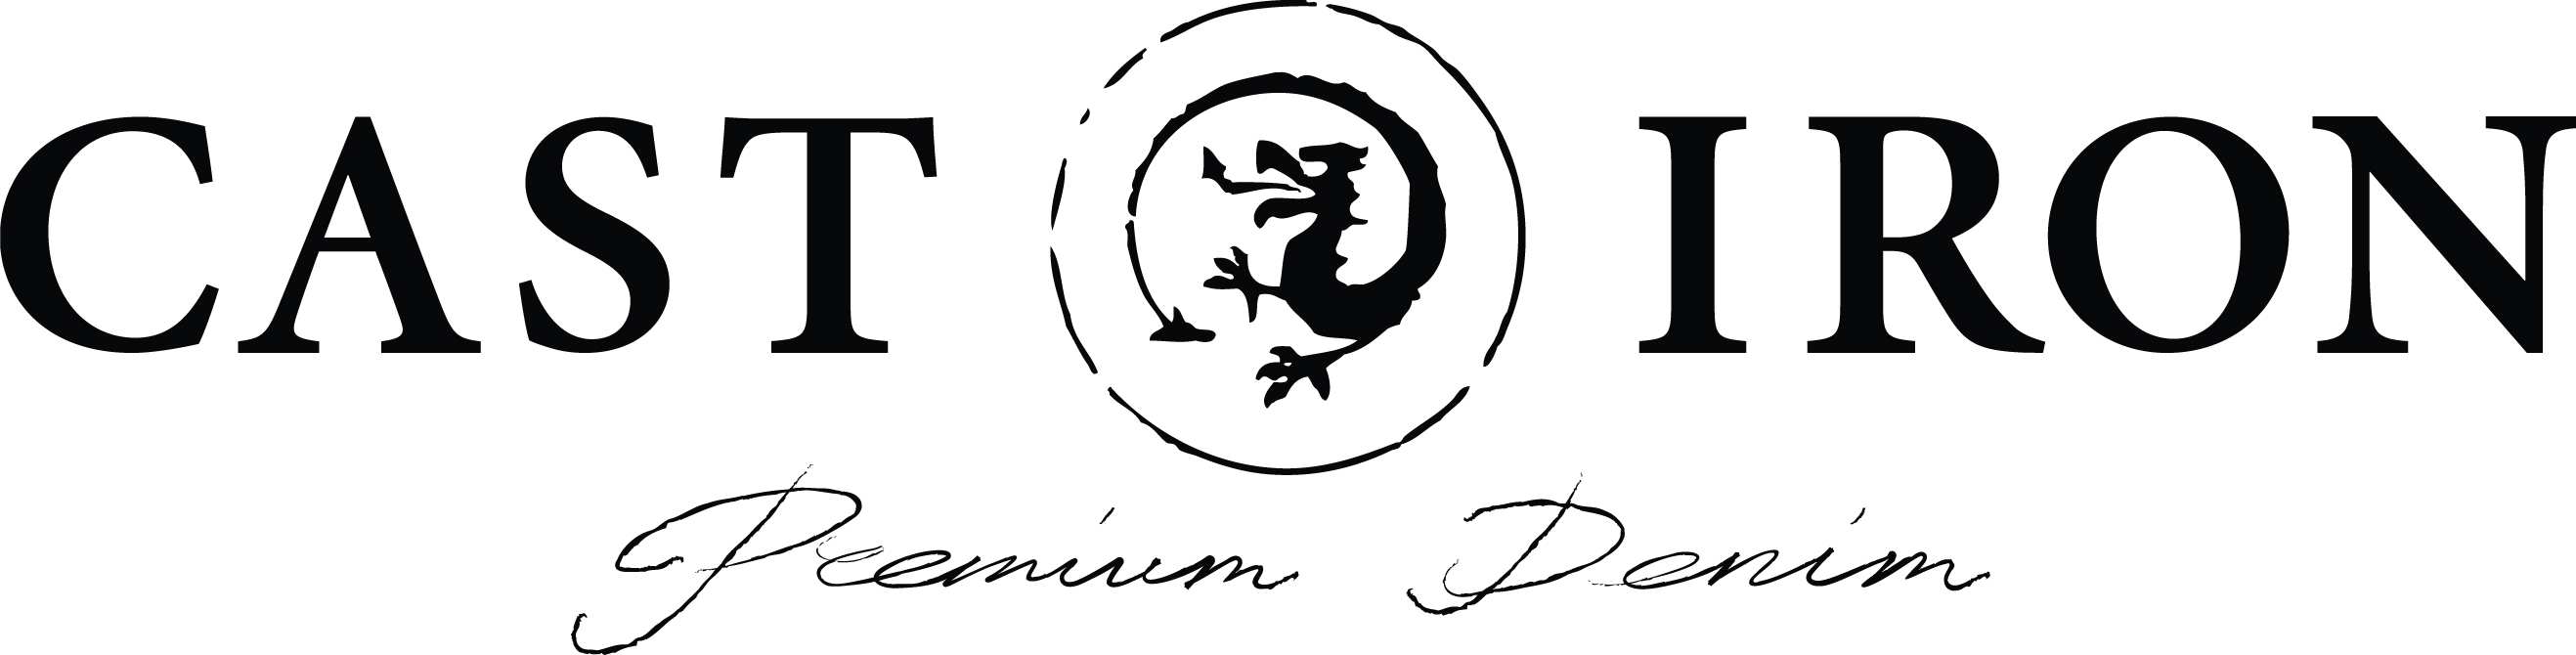 cast-iron-logo